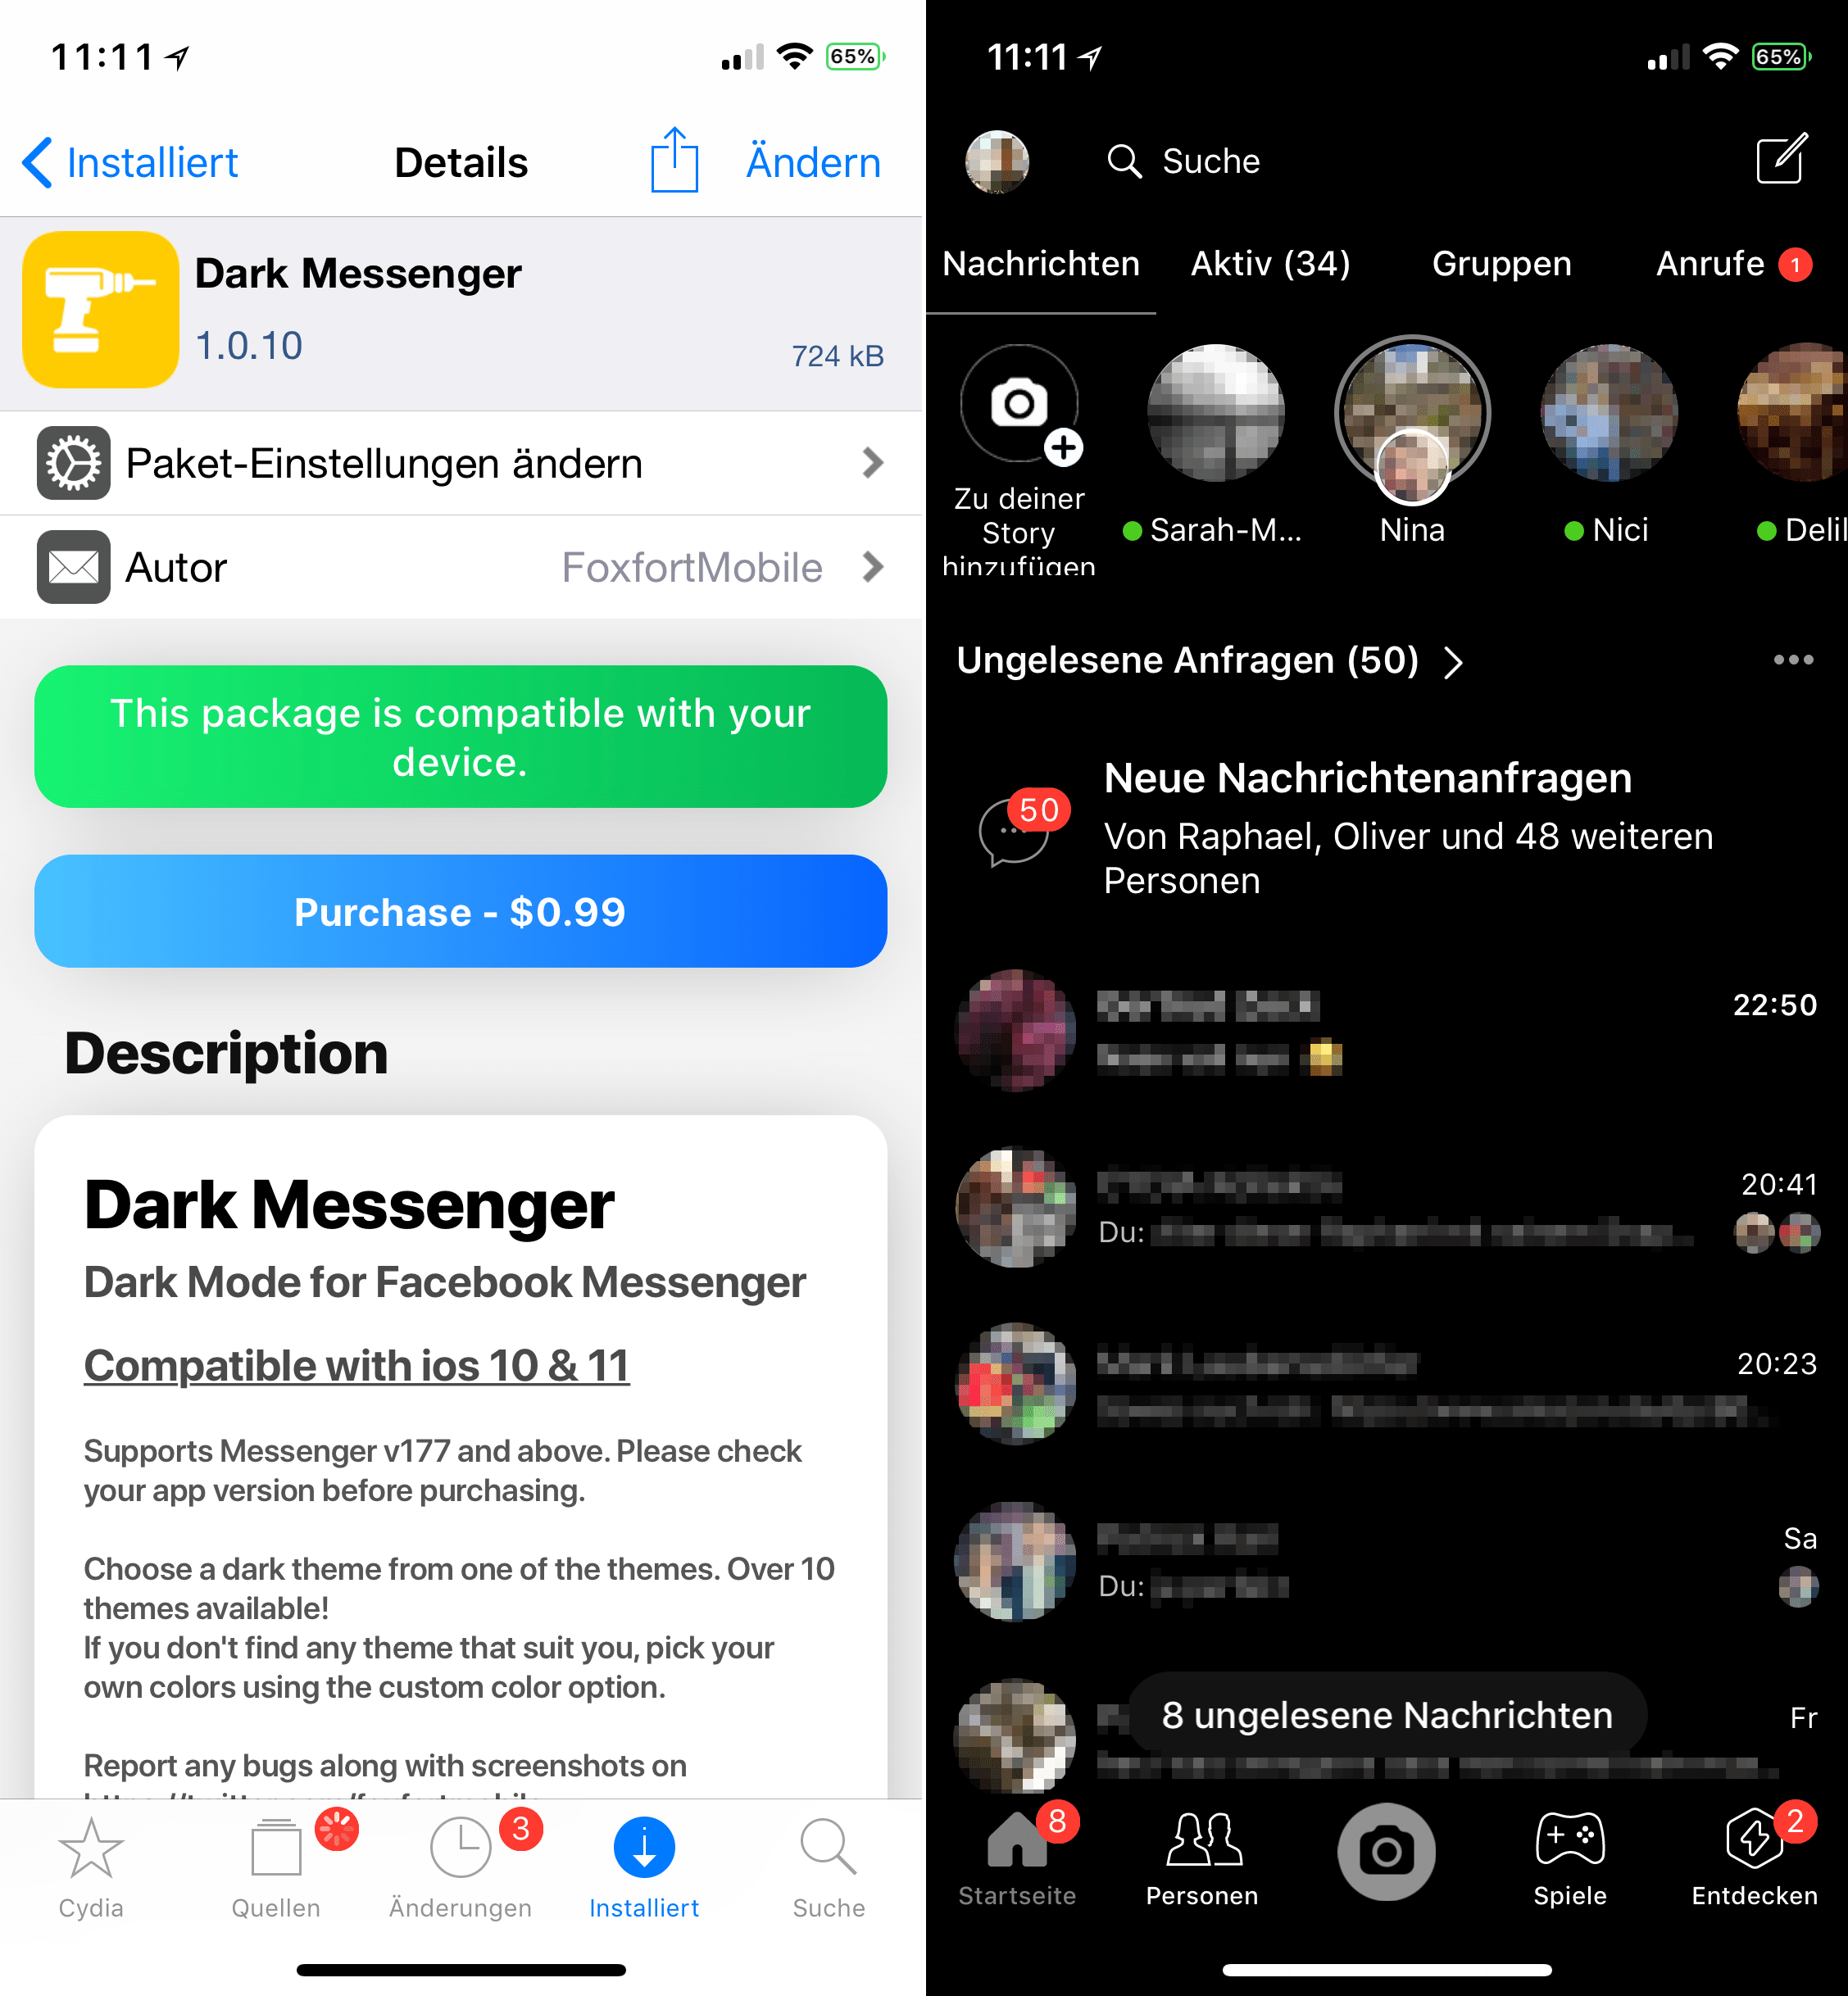 Use Facebook Massenger with darkmode, Dark Messenger, Cydia, Sileo, Tweak, Download, free, hack, crack, easy, Darkmode, iOS 11, Hack4Life, Fabian Geissler, Repo, alternative download, packix